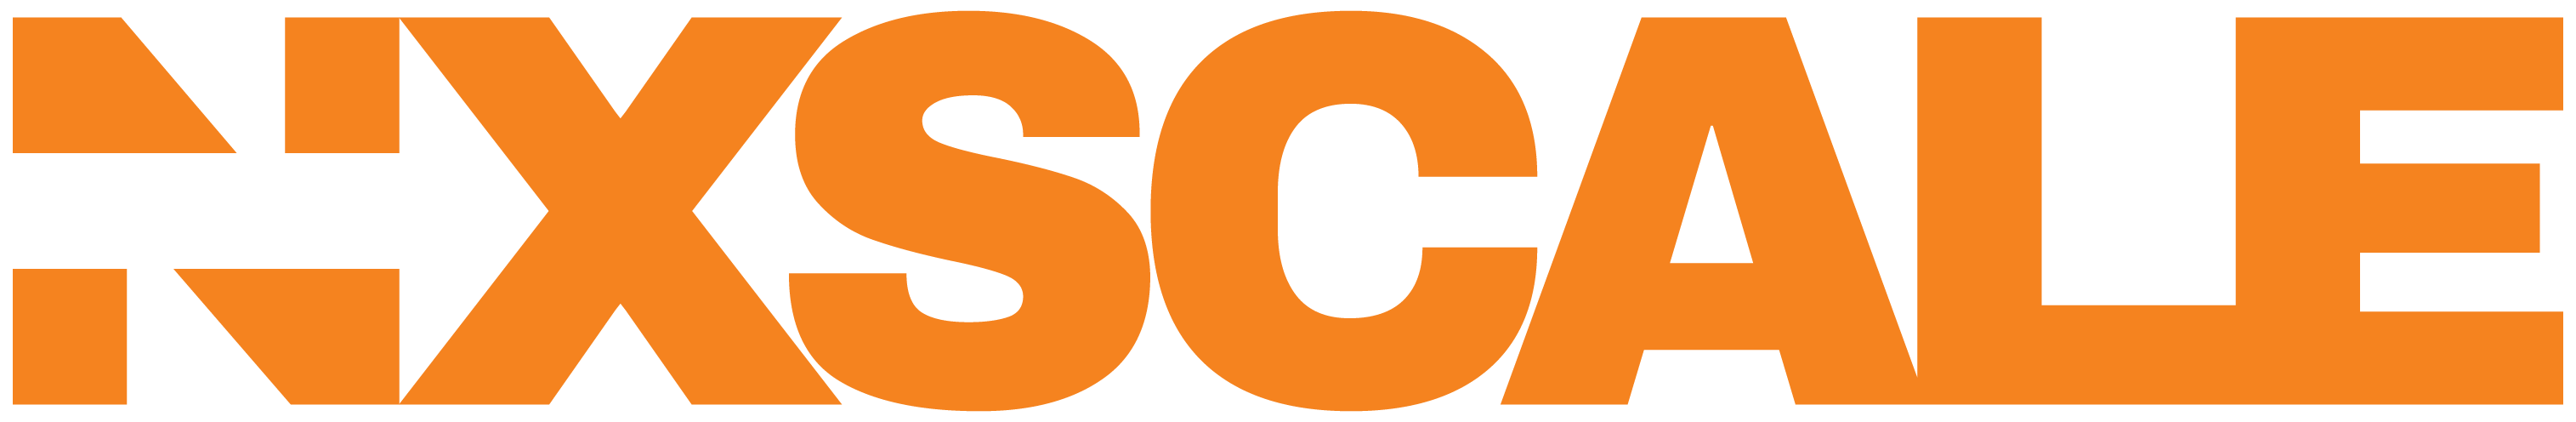 nXscaleSolutions Inc logo